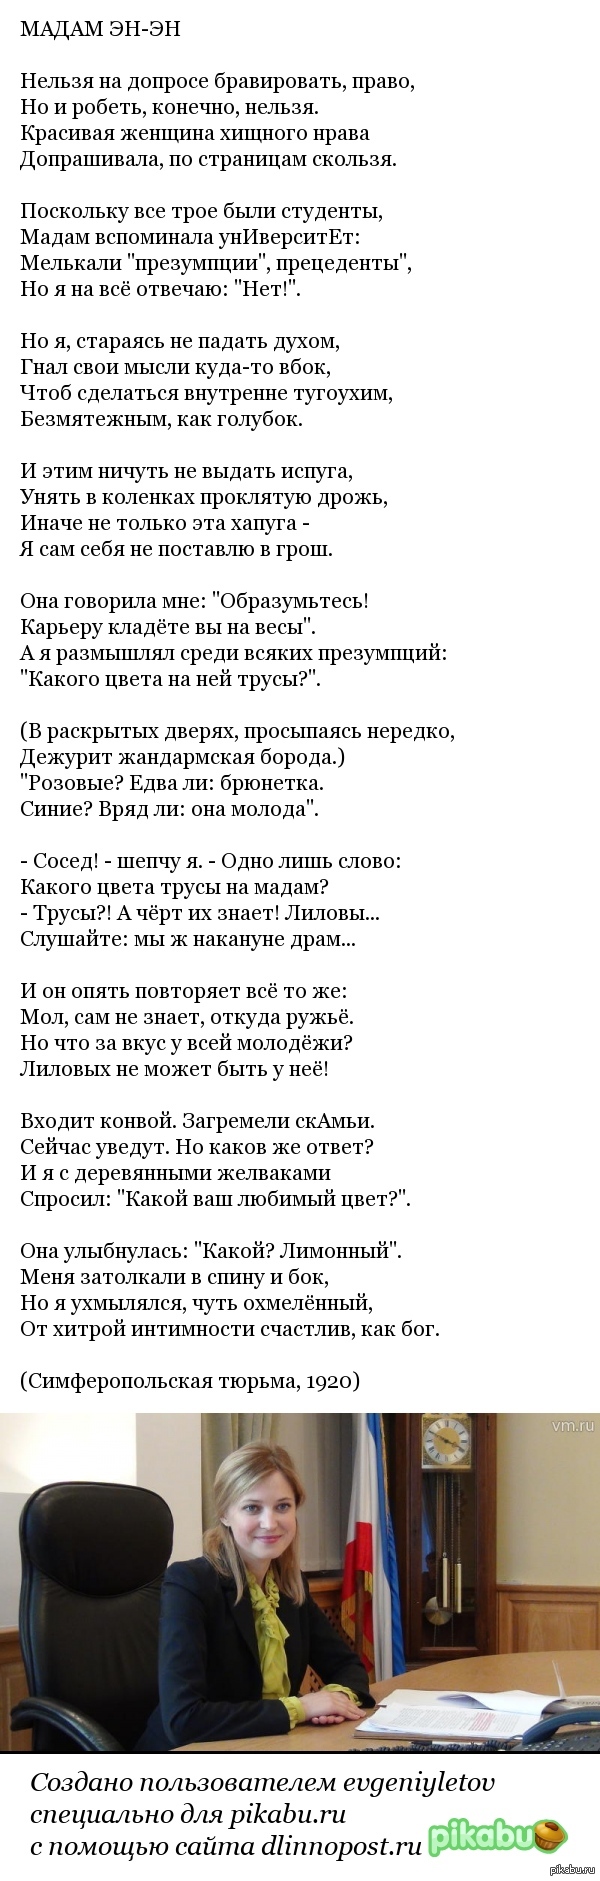 Madame N.P. - Poem, Natalia Poklonskaya, Simferopol